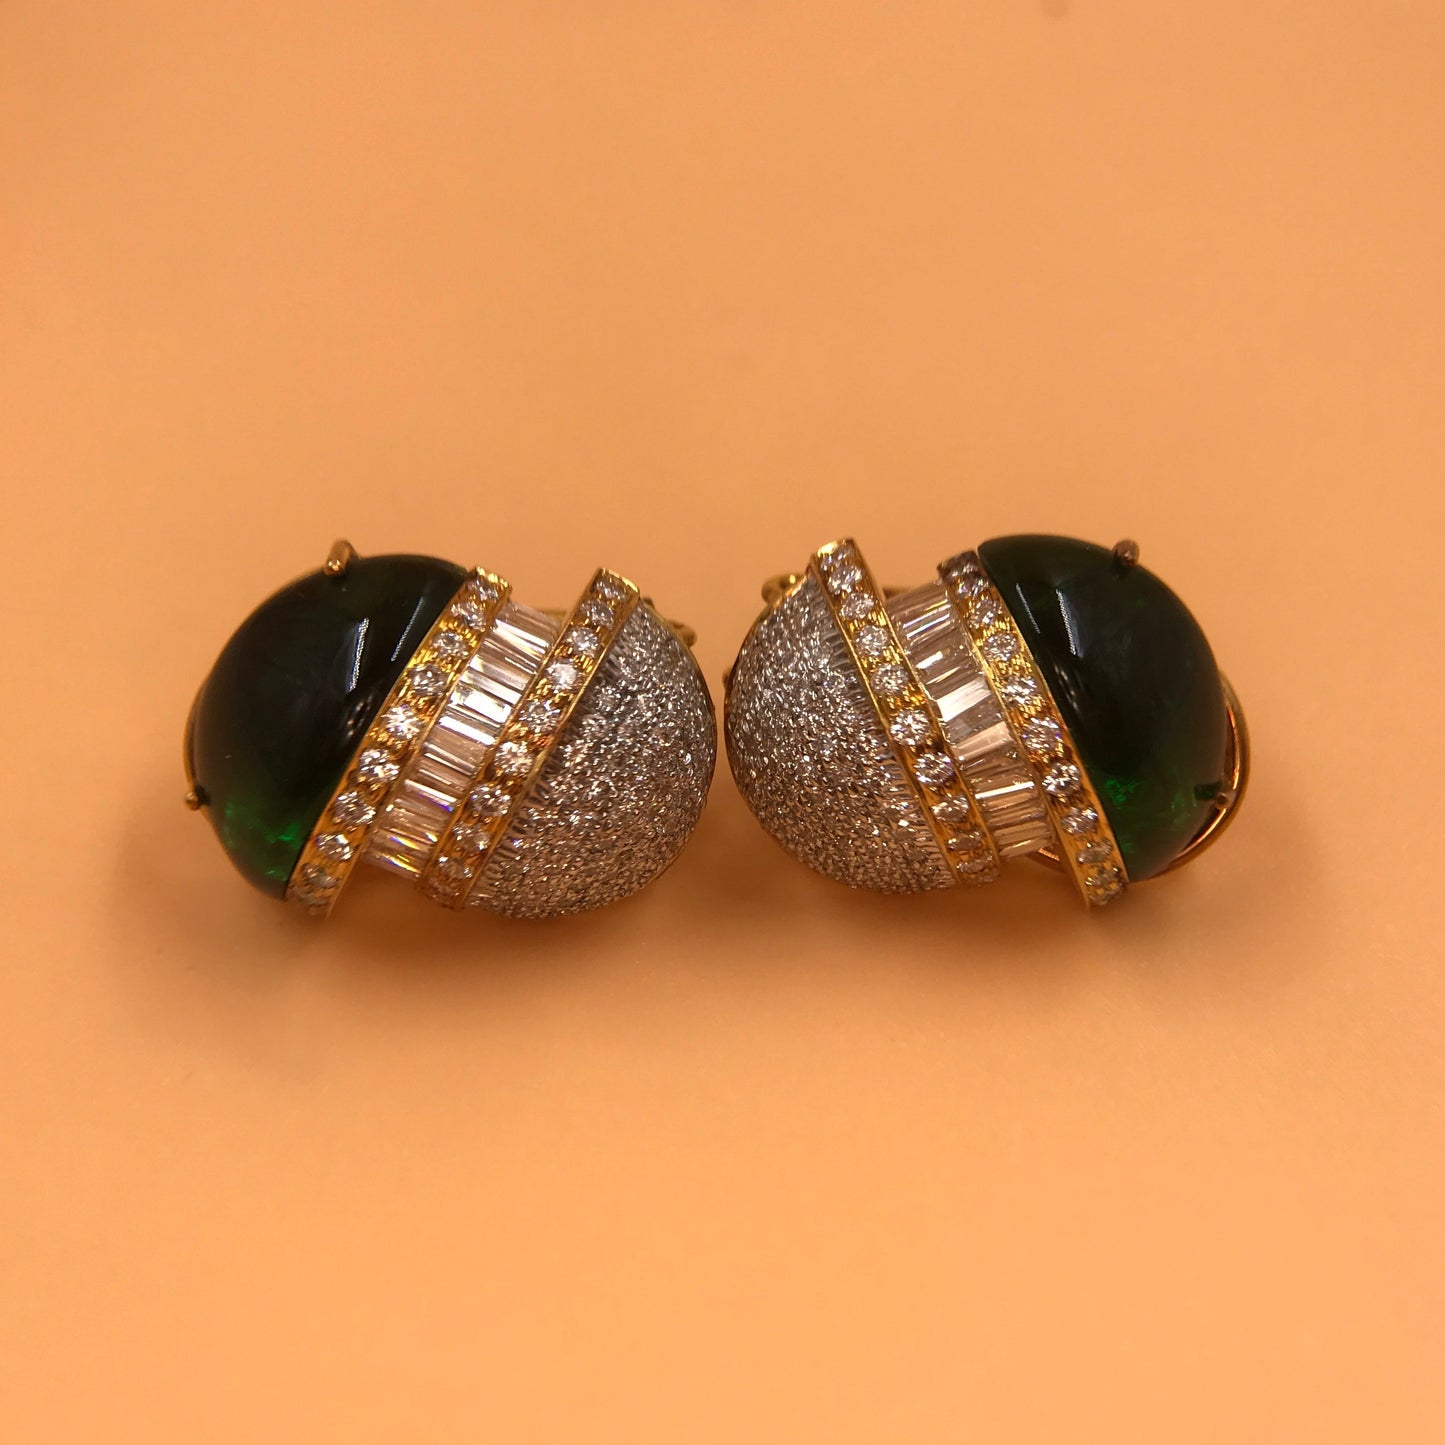 Keeklass modern earrings